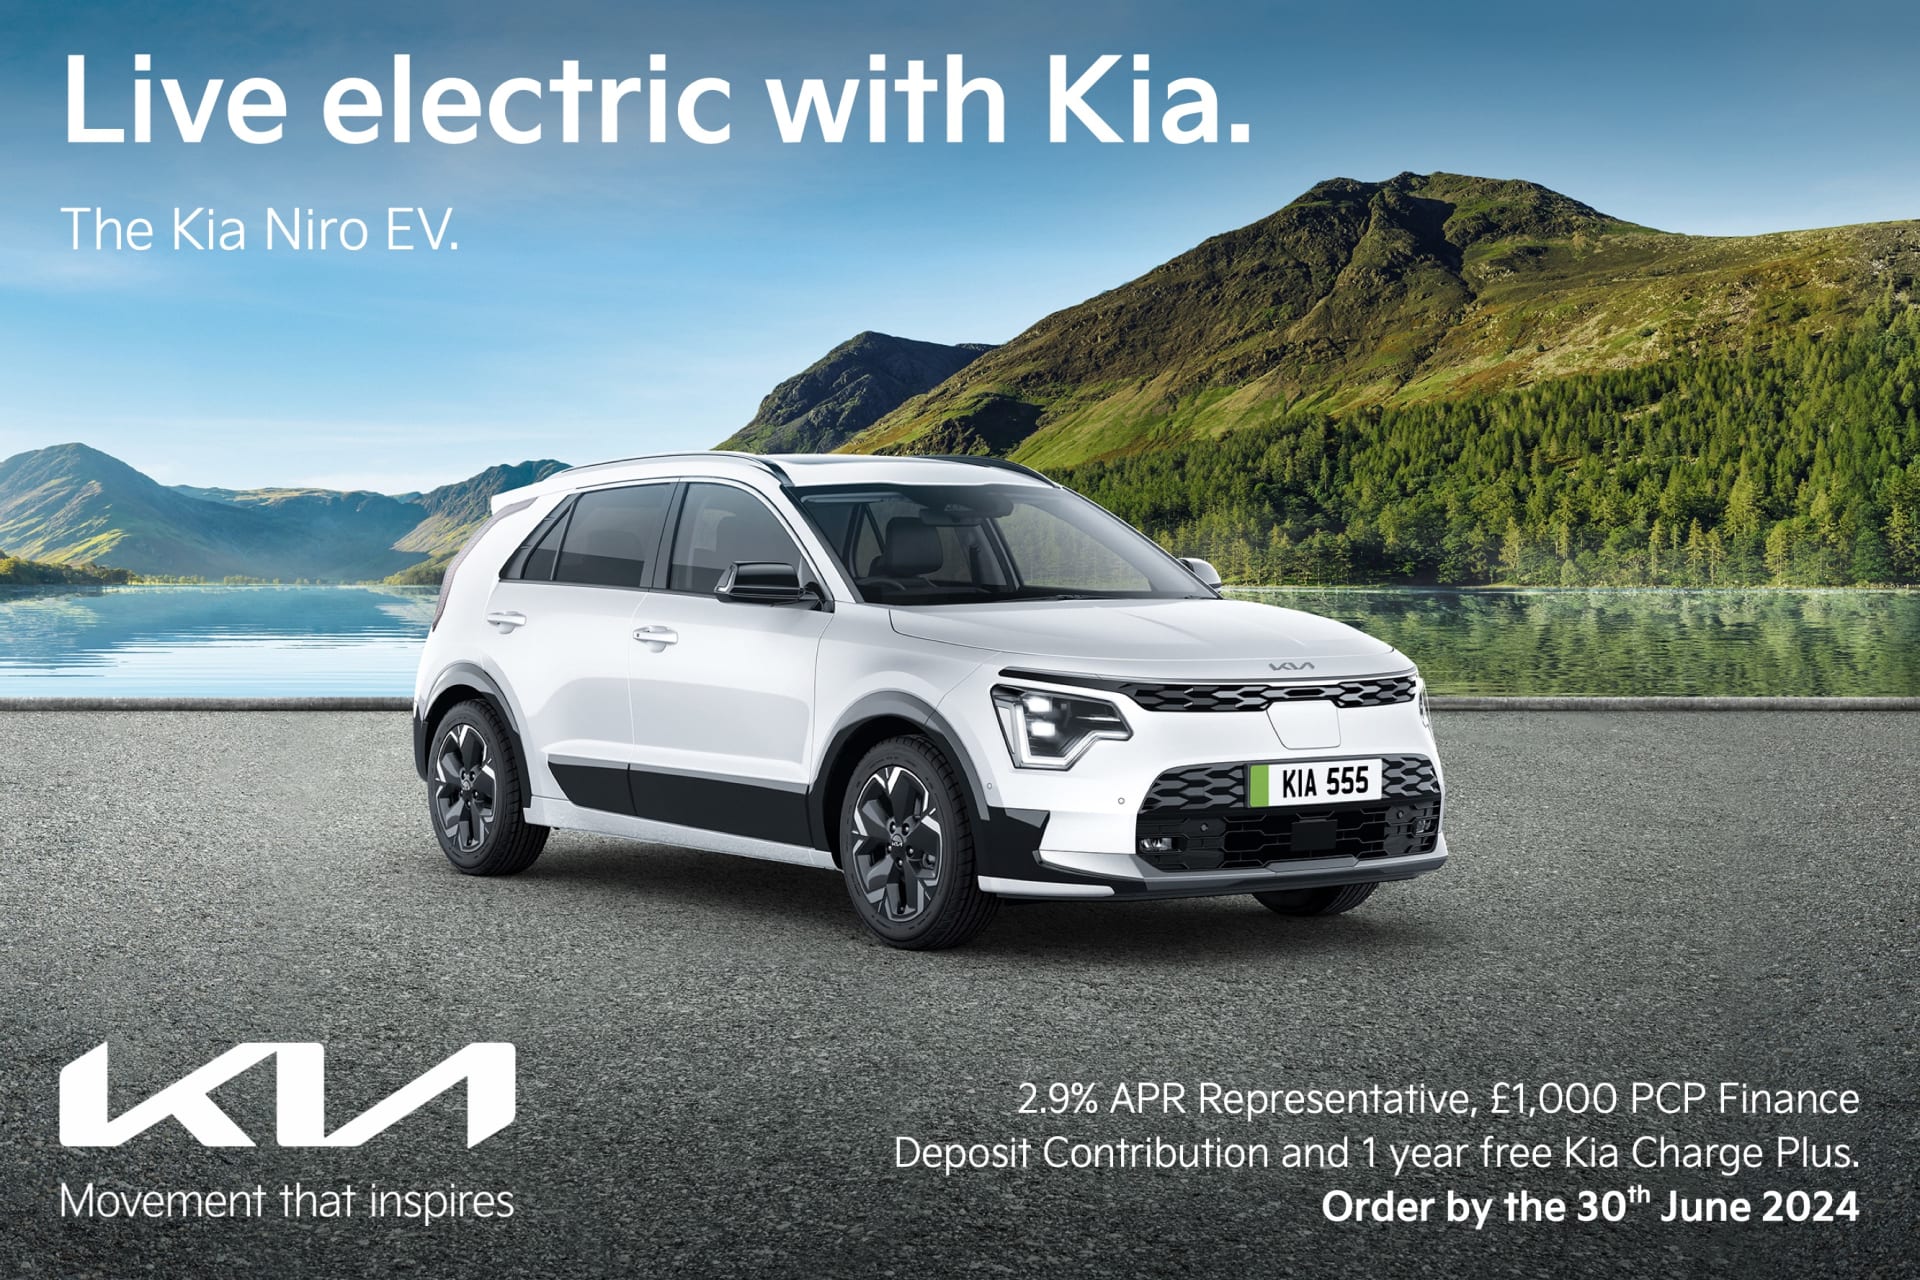 Live Electric with Kia (Niro EV)